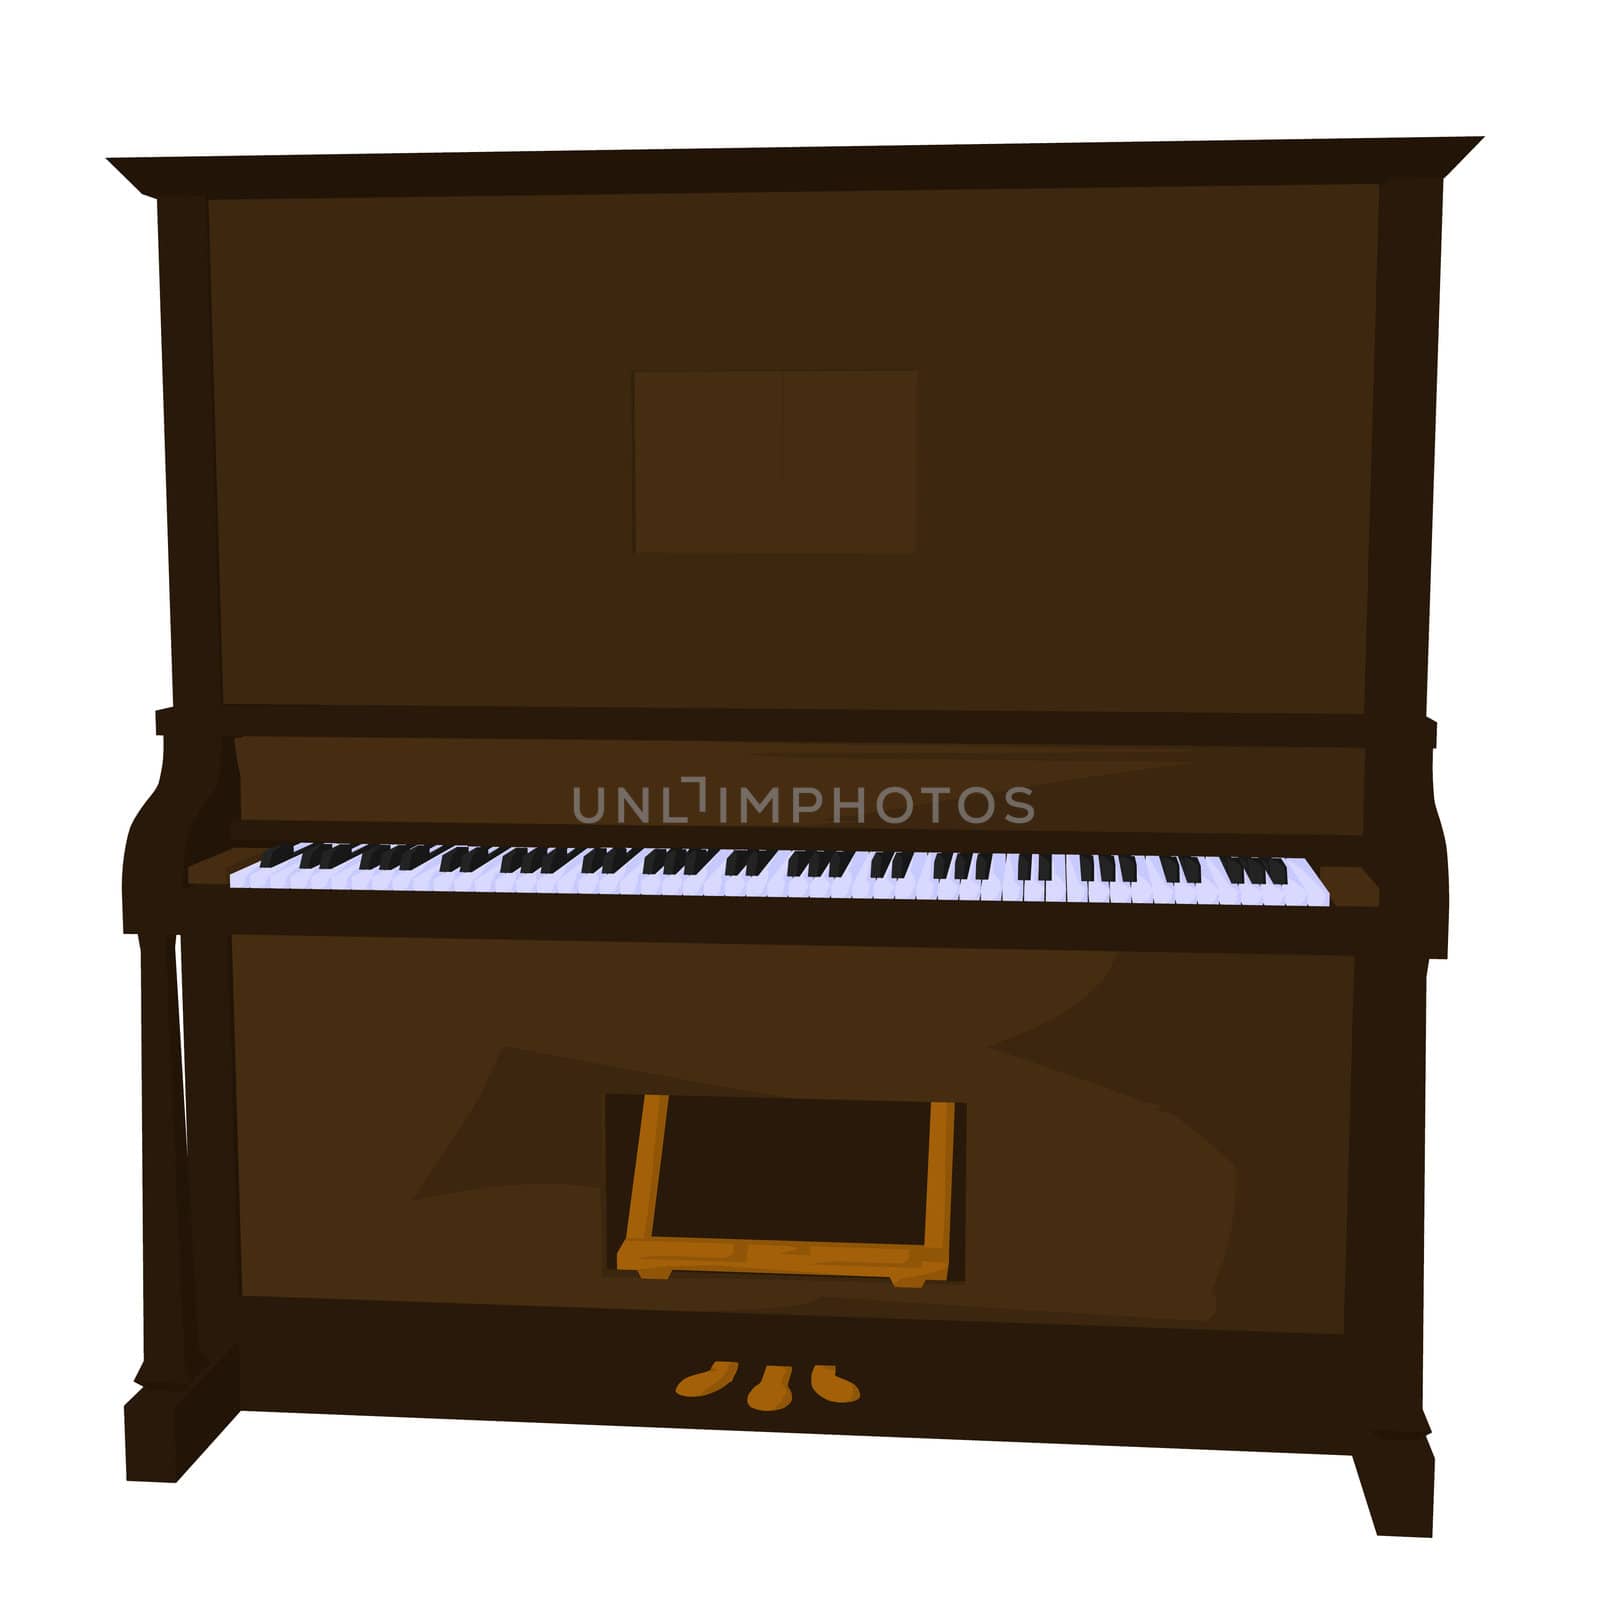 Piano Illustration by kathygold